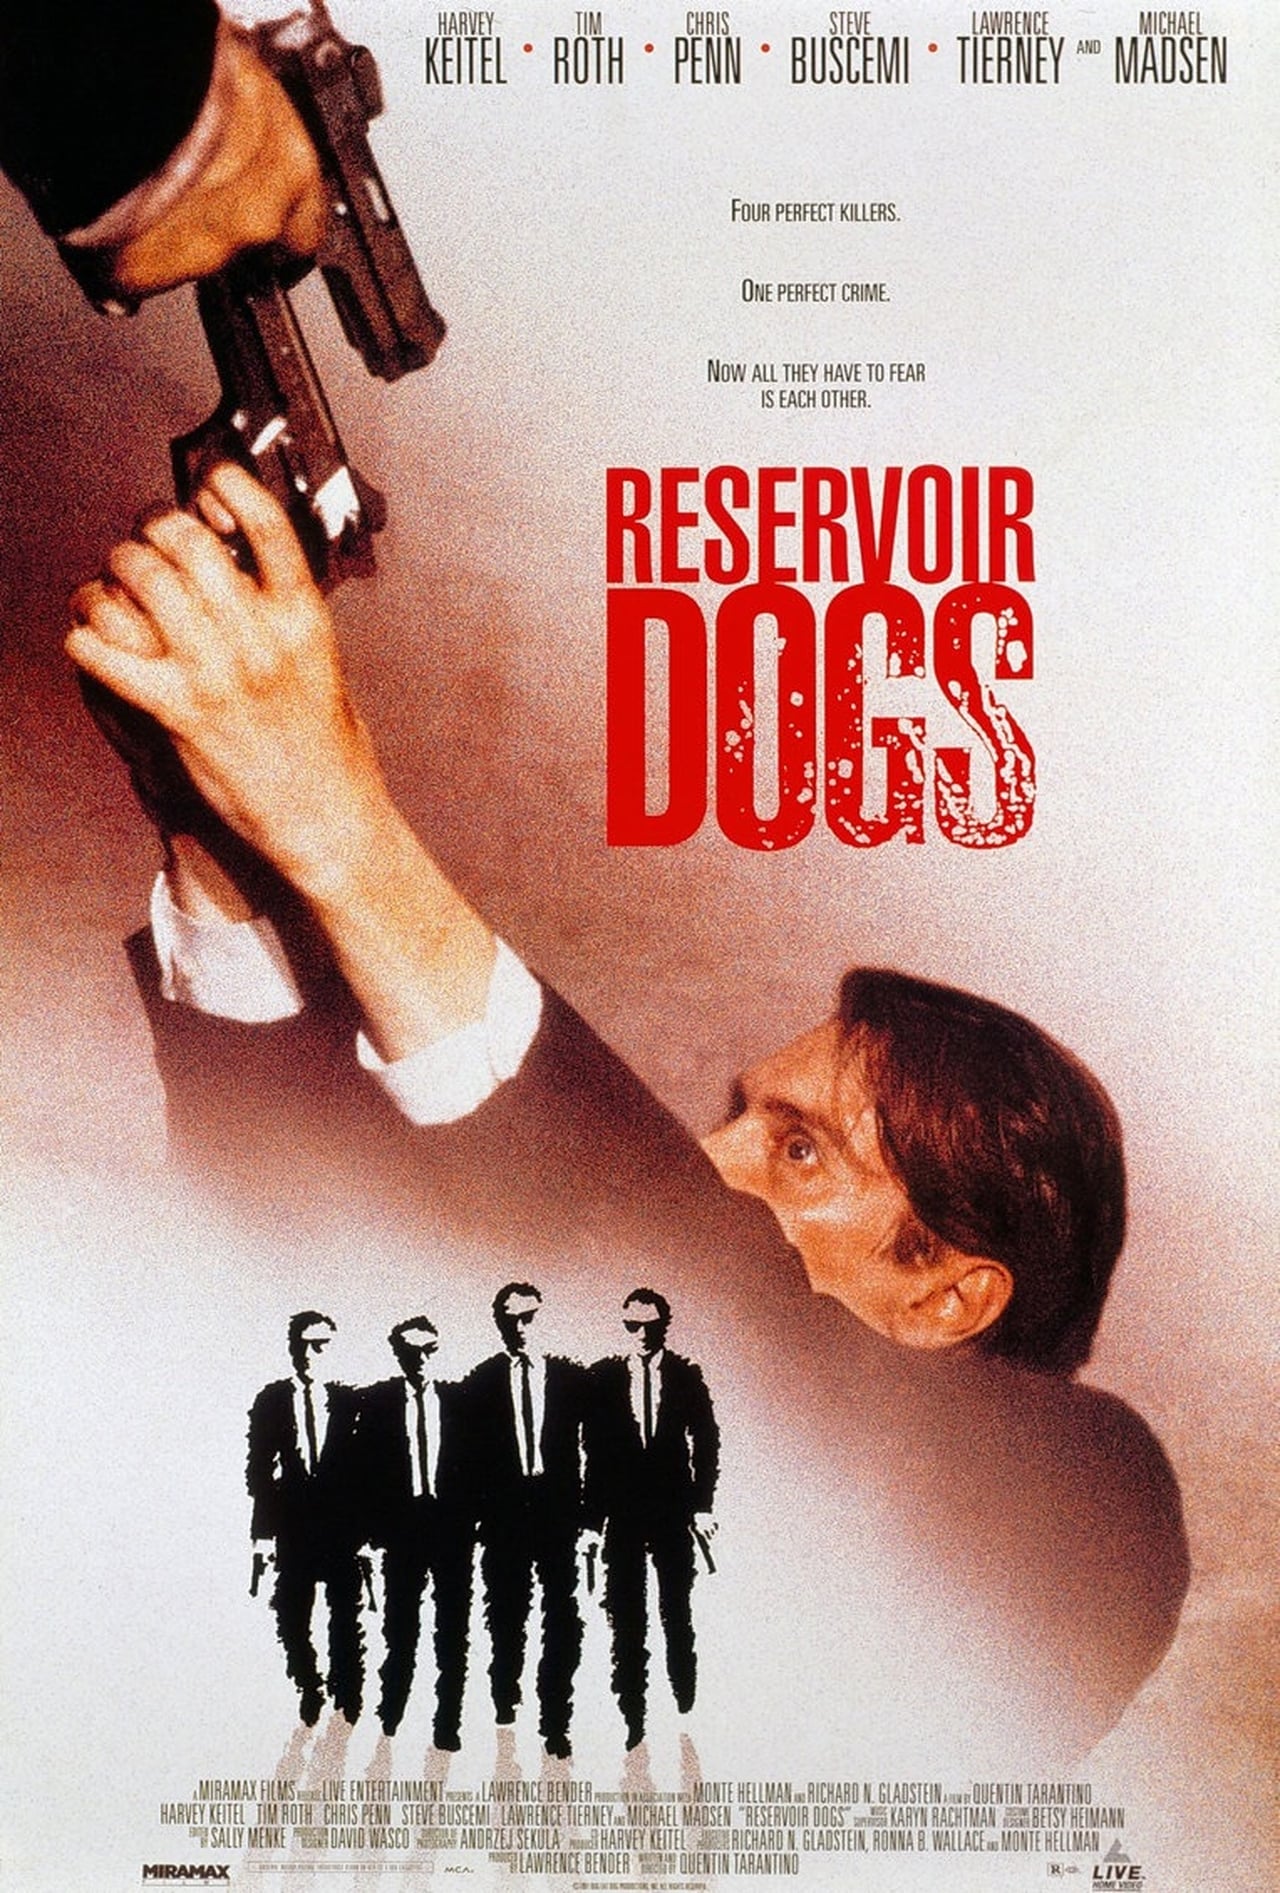 Reservoir Dogs (1992) 3473Kbps 23.976Fps 48Khz BluRay DTS-HD MA 5.1Ch Turkish Audio TAC